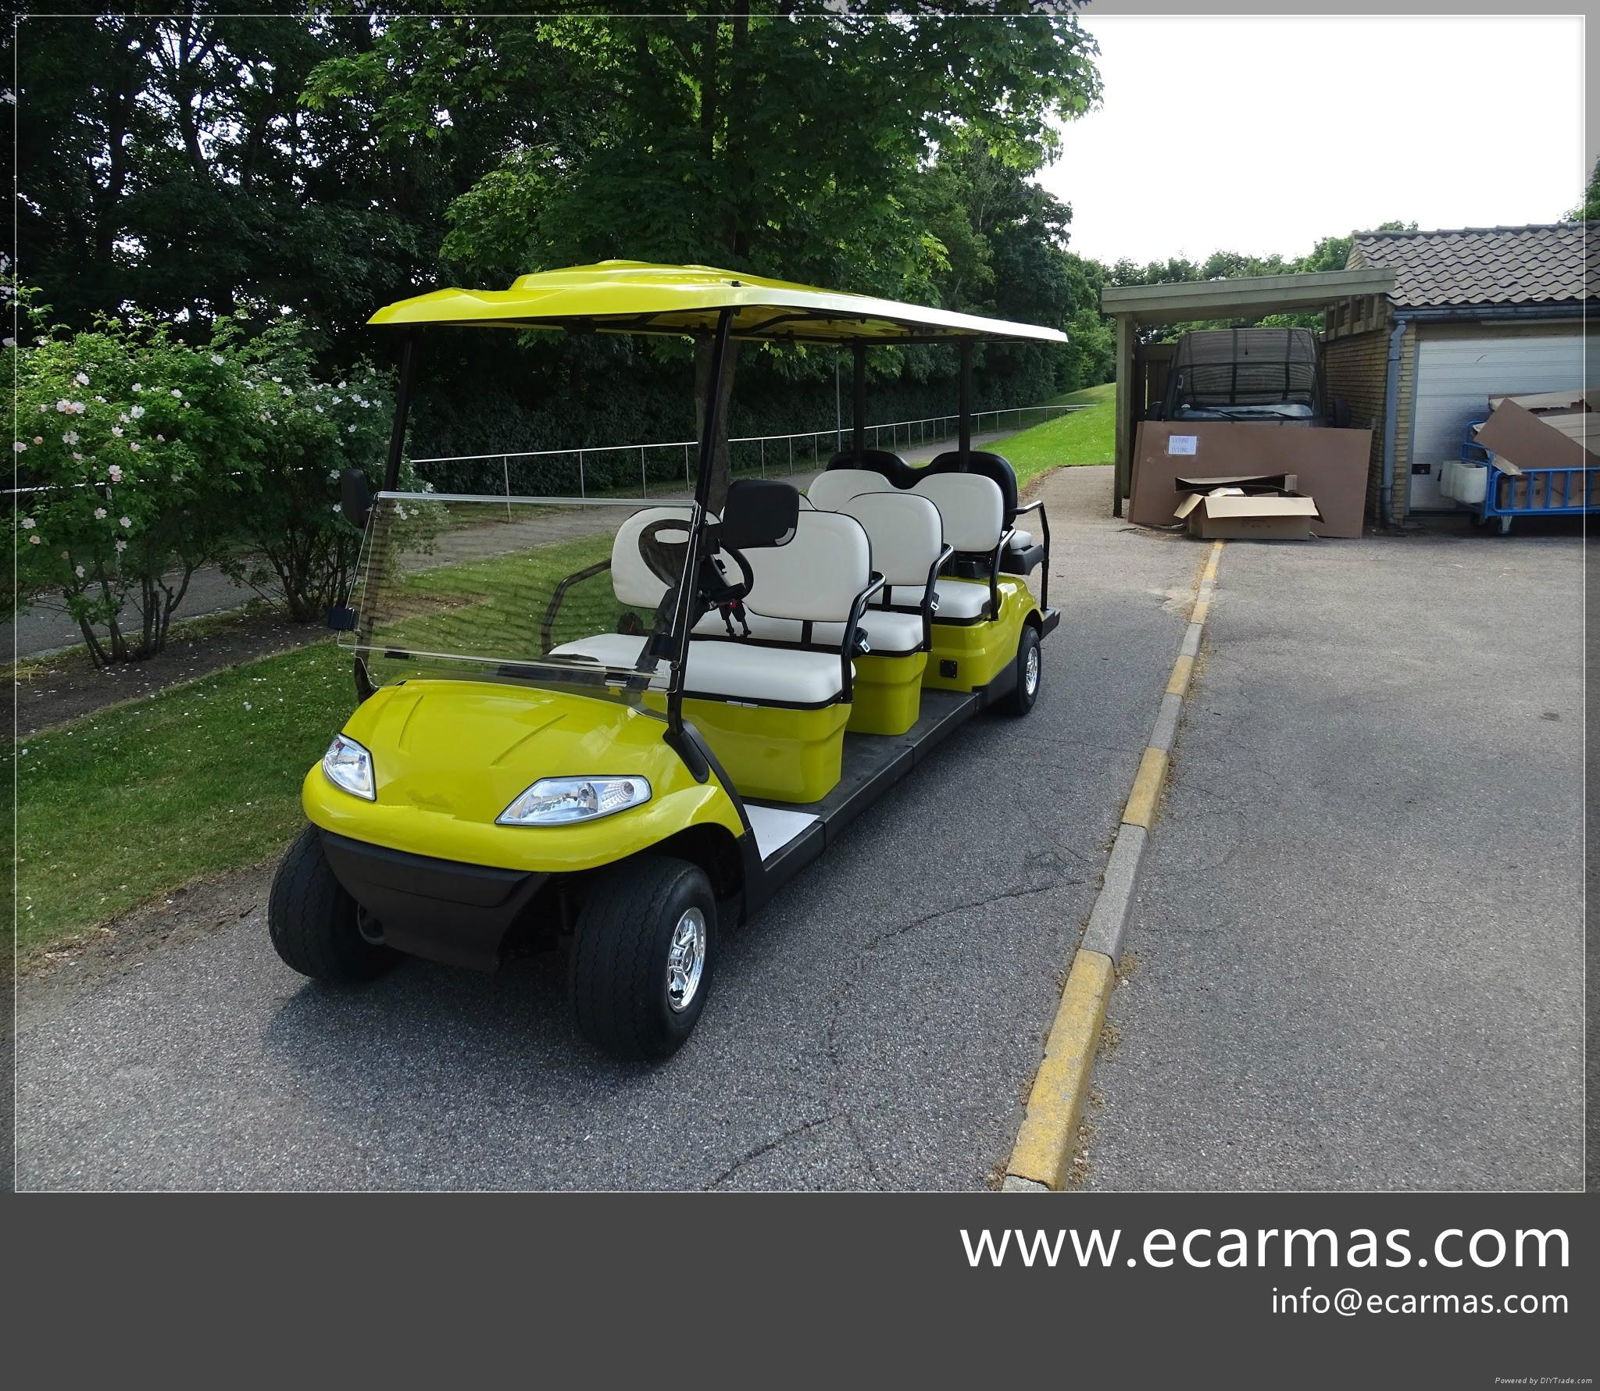 2021 ECARMAS resort b   y shuttle cart